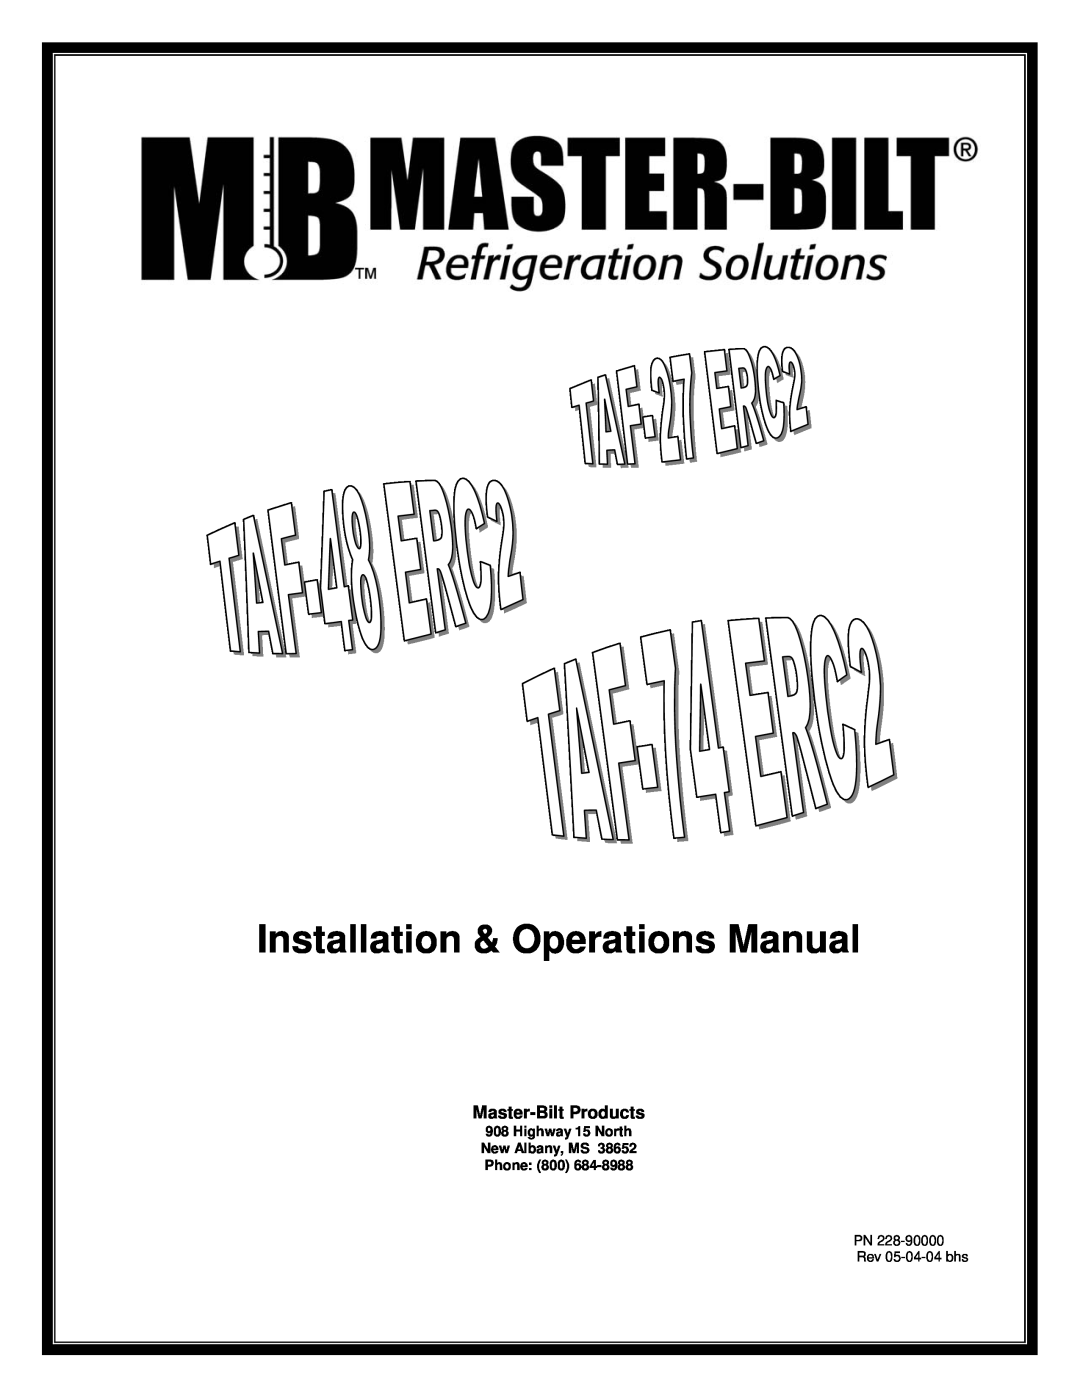 Master Bilt TAF-27 ERC2, TAF-48 ERC2 manual Installation & Operations Manual, Master-BiltProducts, PN Rev 05-04-04bhs 